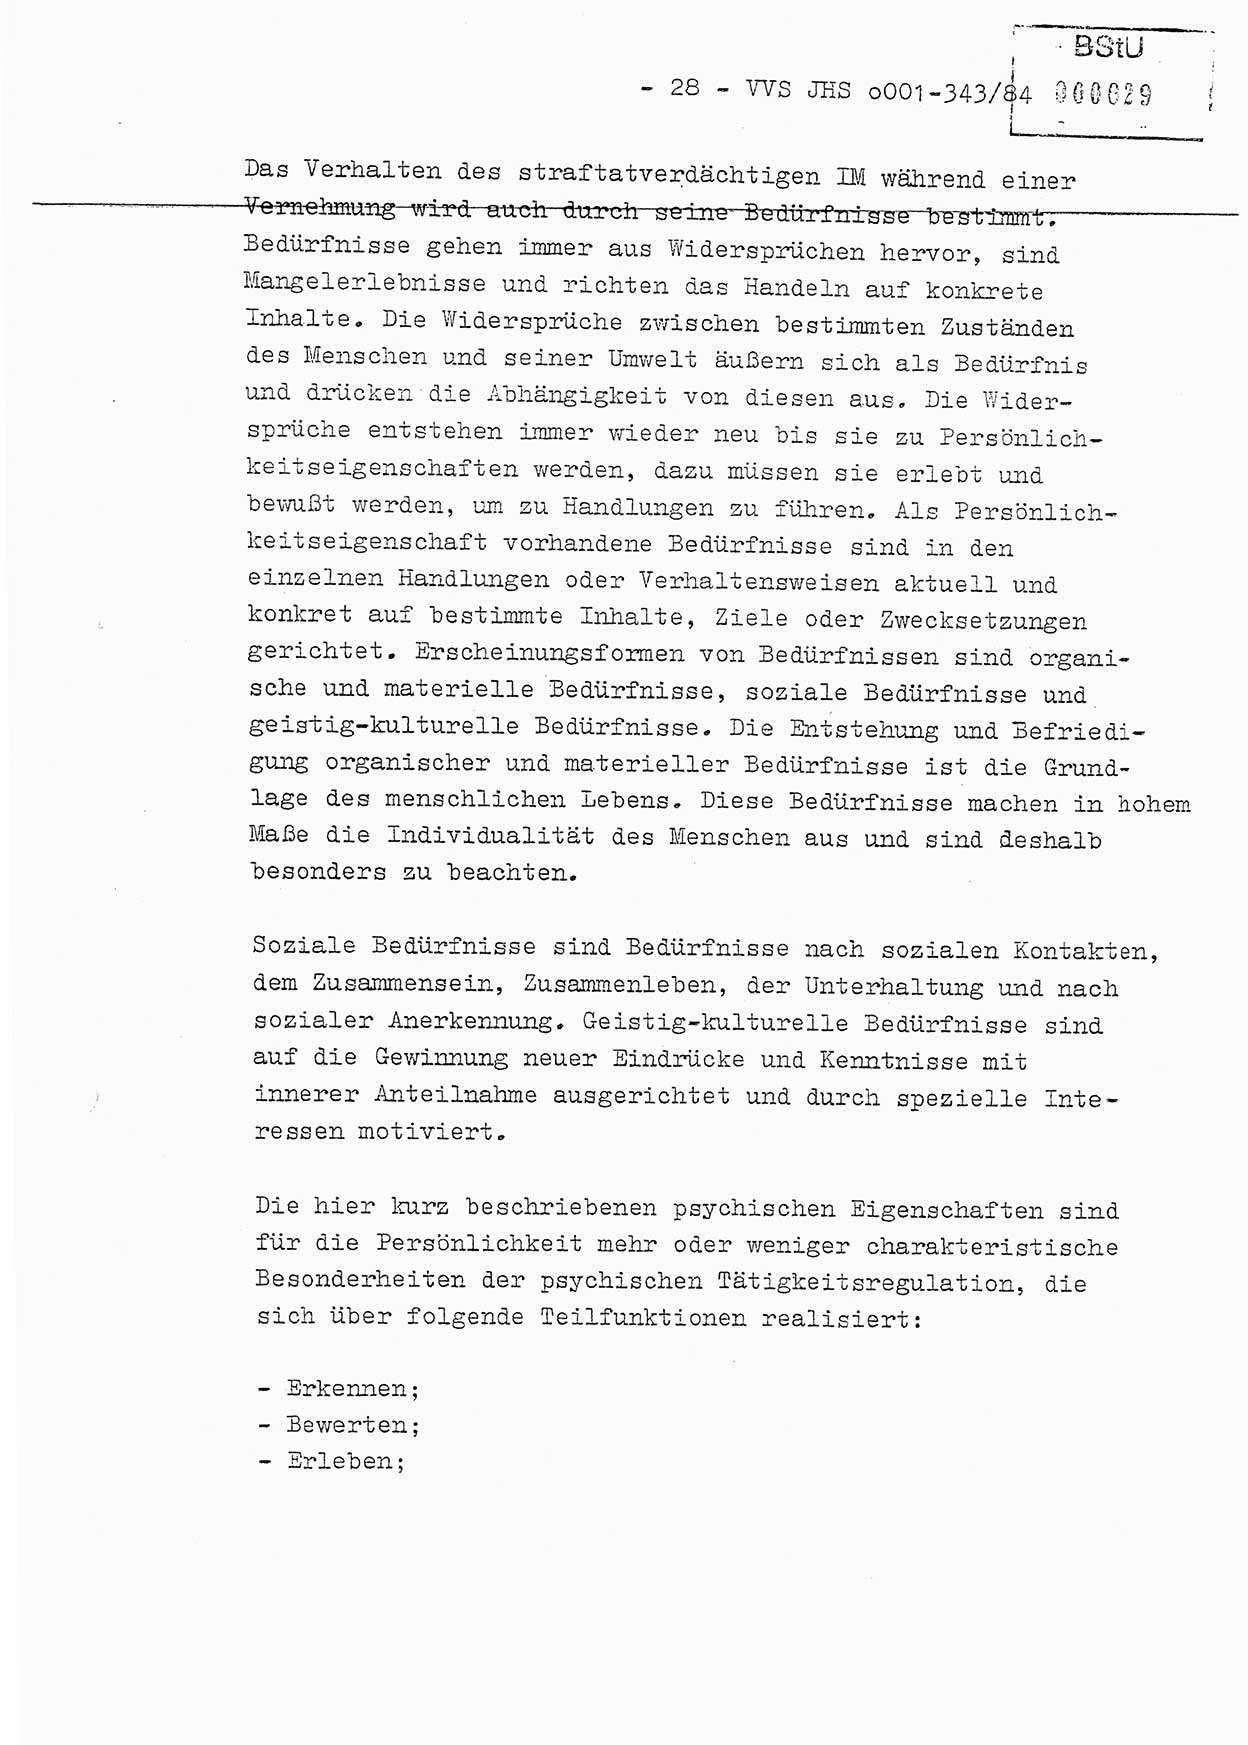 Diplomarbeit, Oberleutnant Bernd Michael (HA Ⅸ/5), Oberleutnant Peter Felber (HA IX/5), Ministerium für Staatssicherheit (MfS) [Deutsche Demokratische Republik (DDR)], Juristische Hochschule (JHS), Vertrauliche Verschlußsache (VVS) o001-343/84, Potsdam 1985, Seite 28 (Dipl.-Arb. MfS DDR JHS VVS o001-343/84 1985, S. 28)